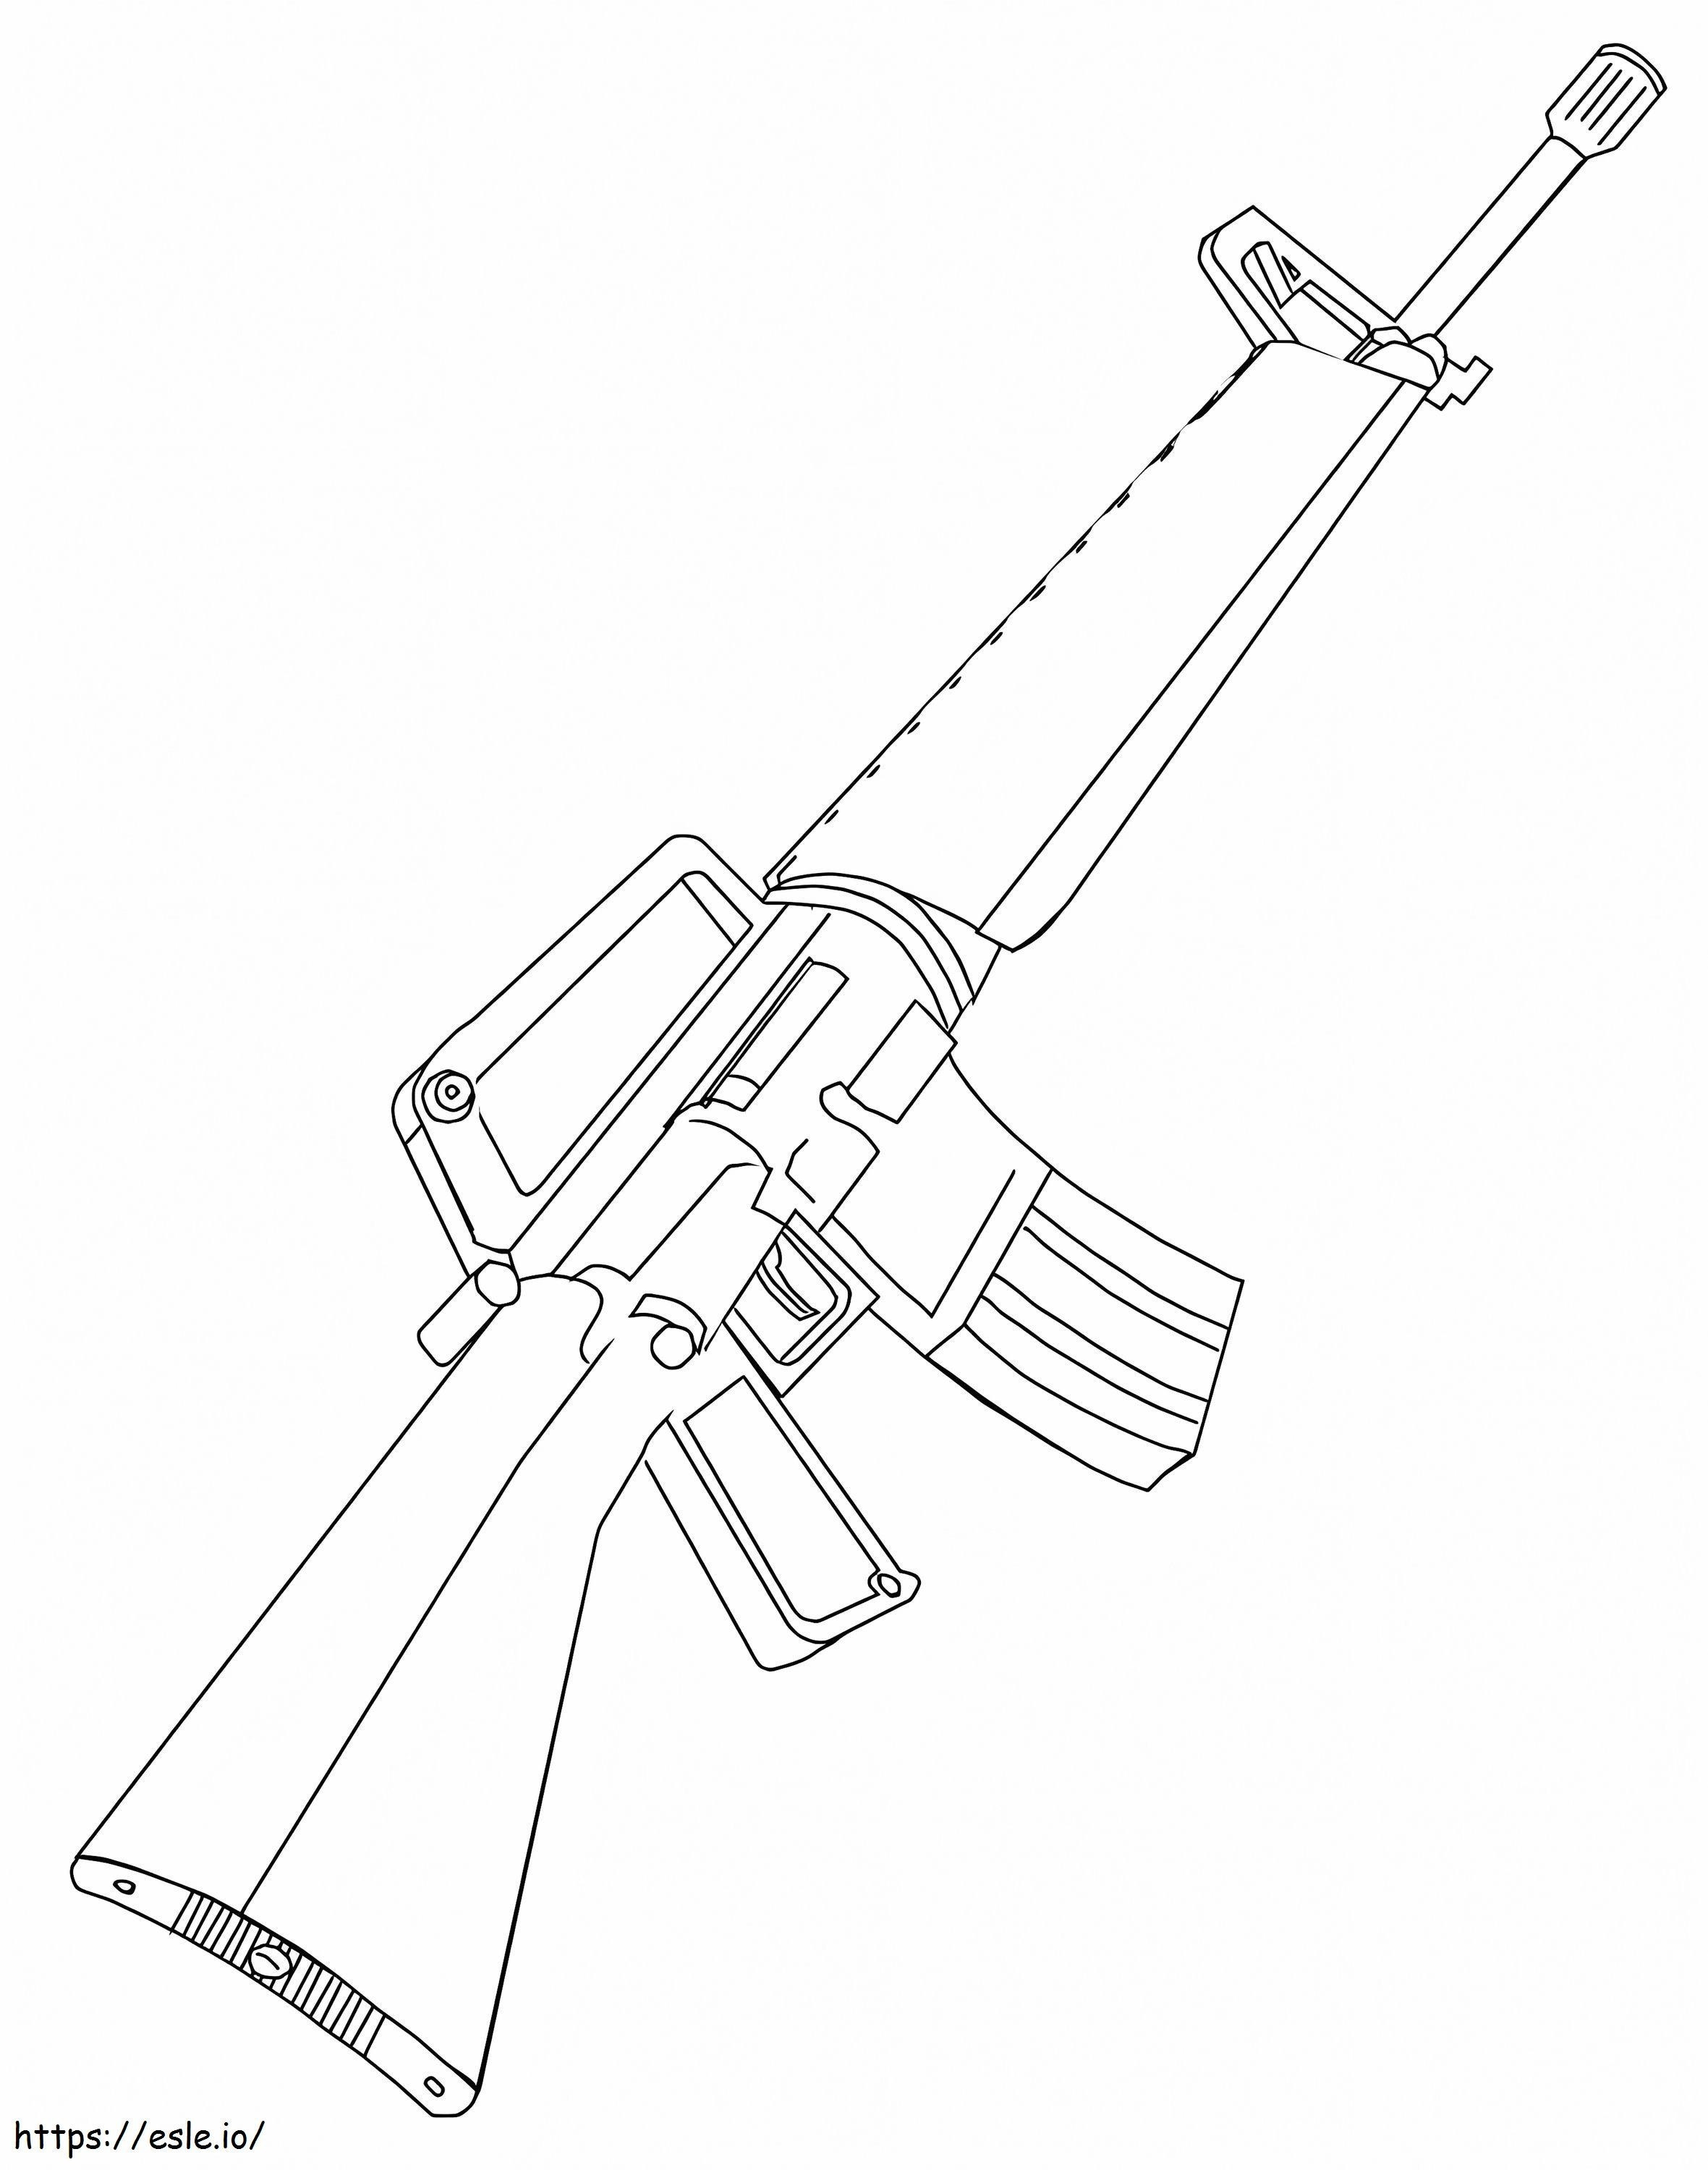 M16 kivääri värityskuva